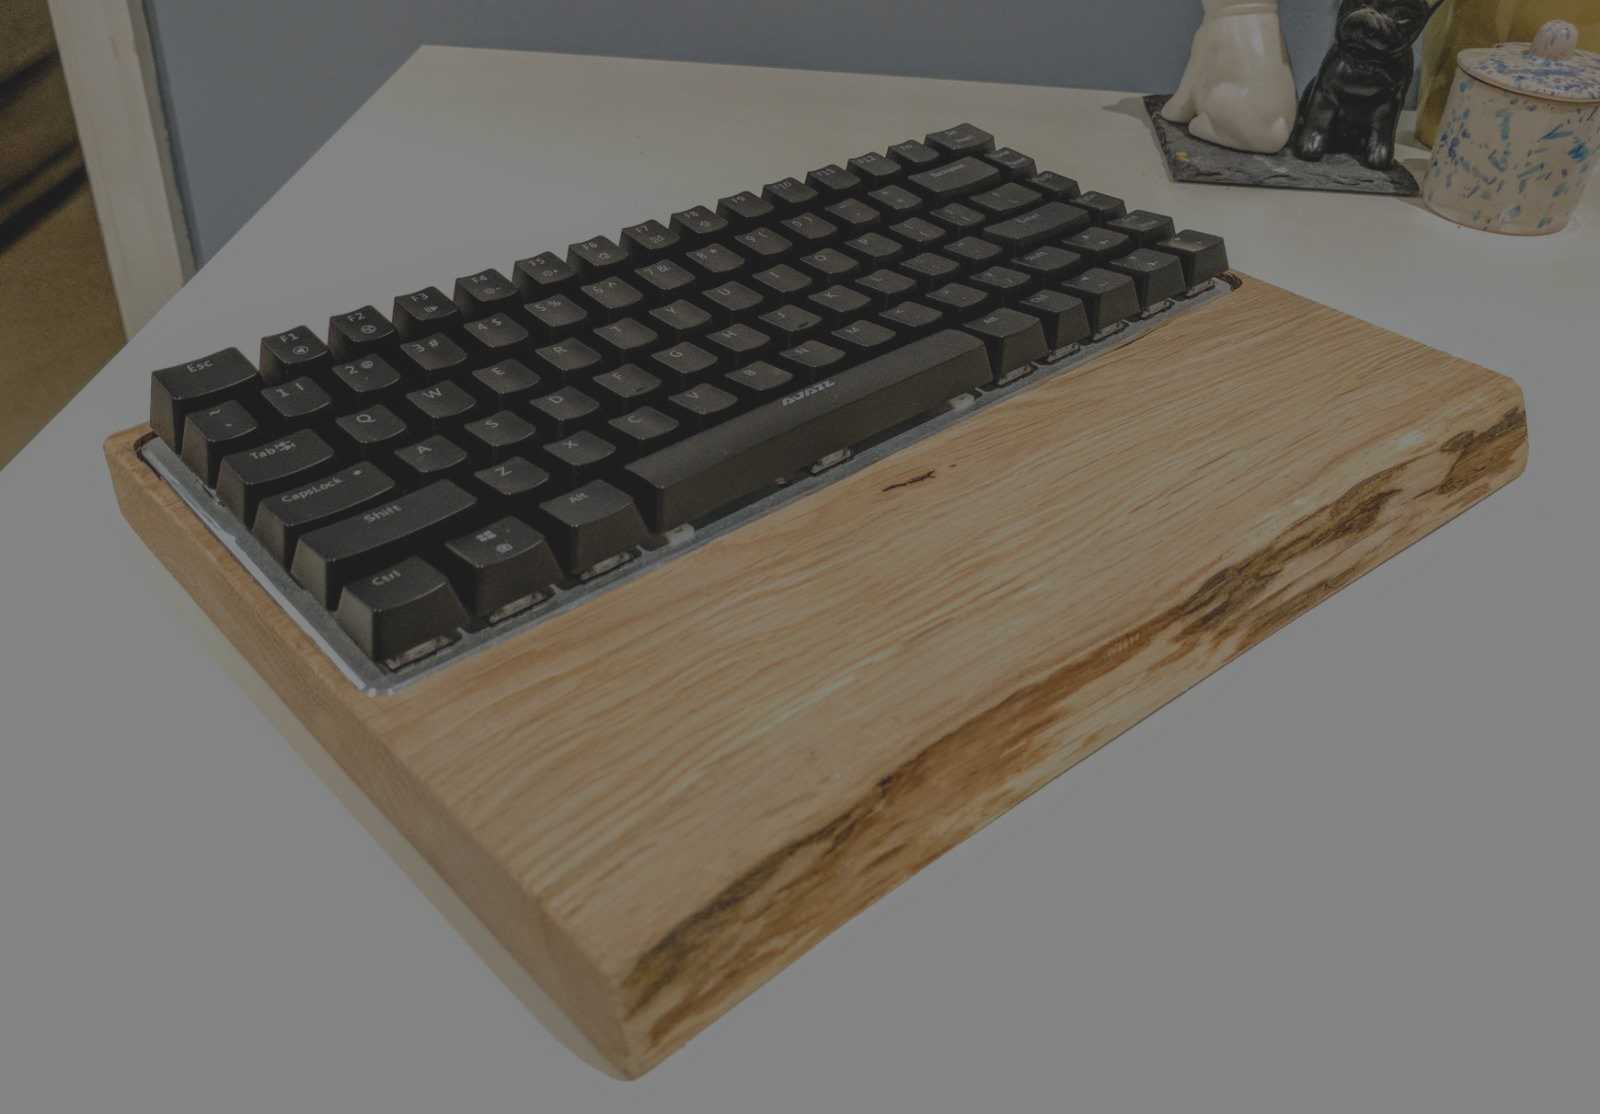 Building a Custom Keyboard Case